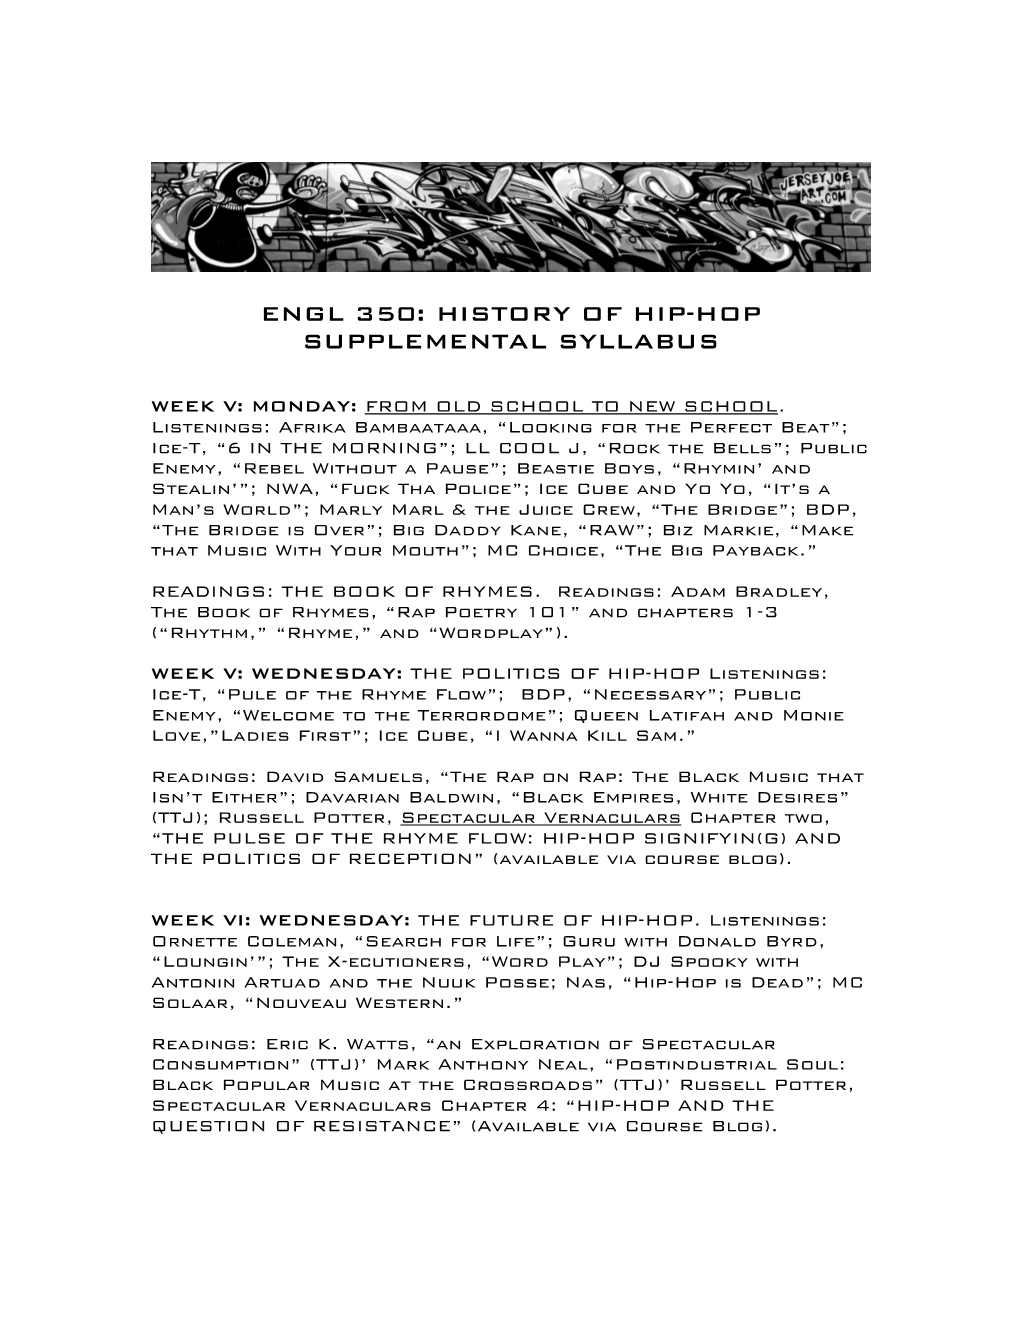 Engl 350: History of Hip-Hop Supplemental Syllabus